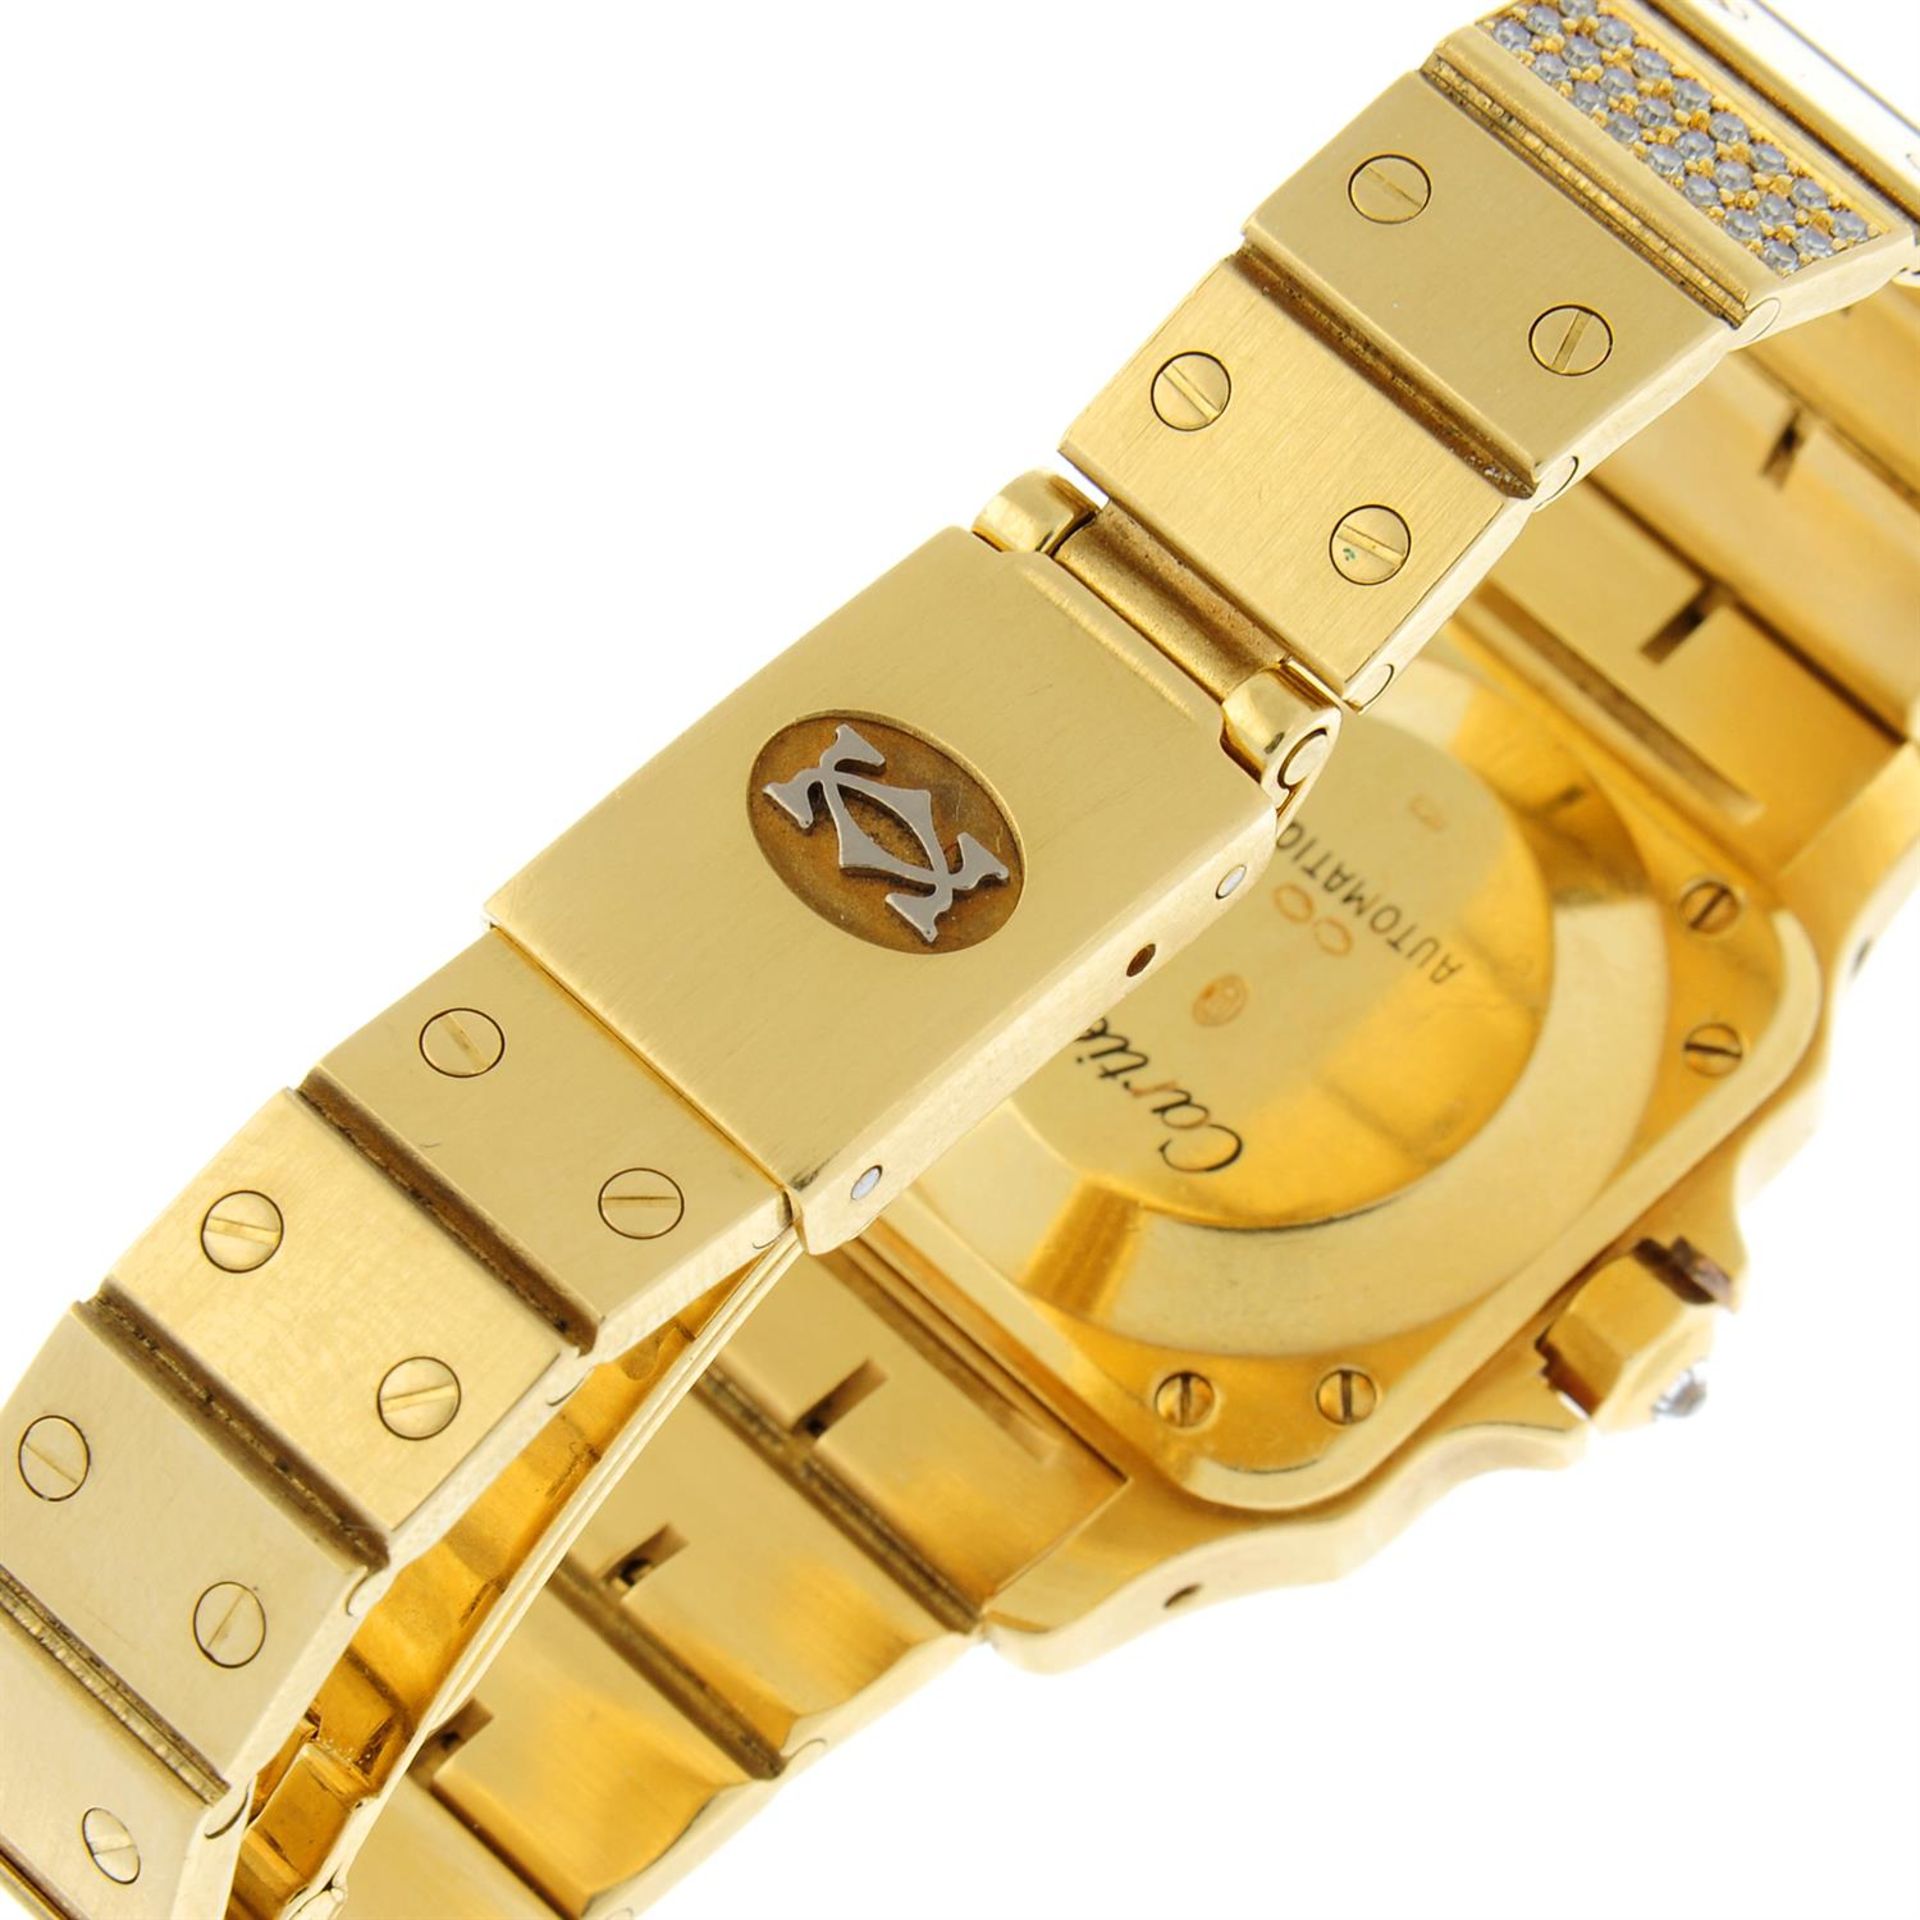 CARTIER - an 18ct gold diamond set Santos bracelet watch, 24mm. - Image 2 of 5